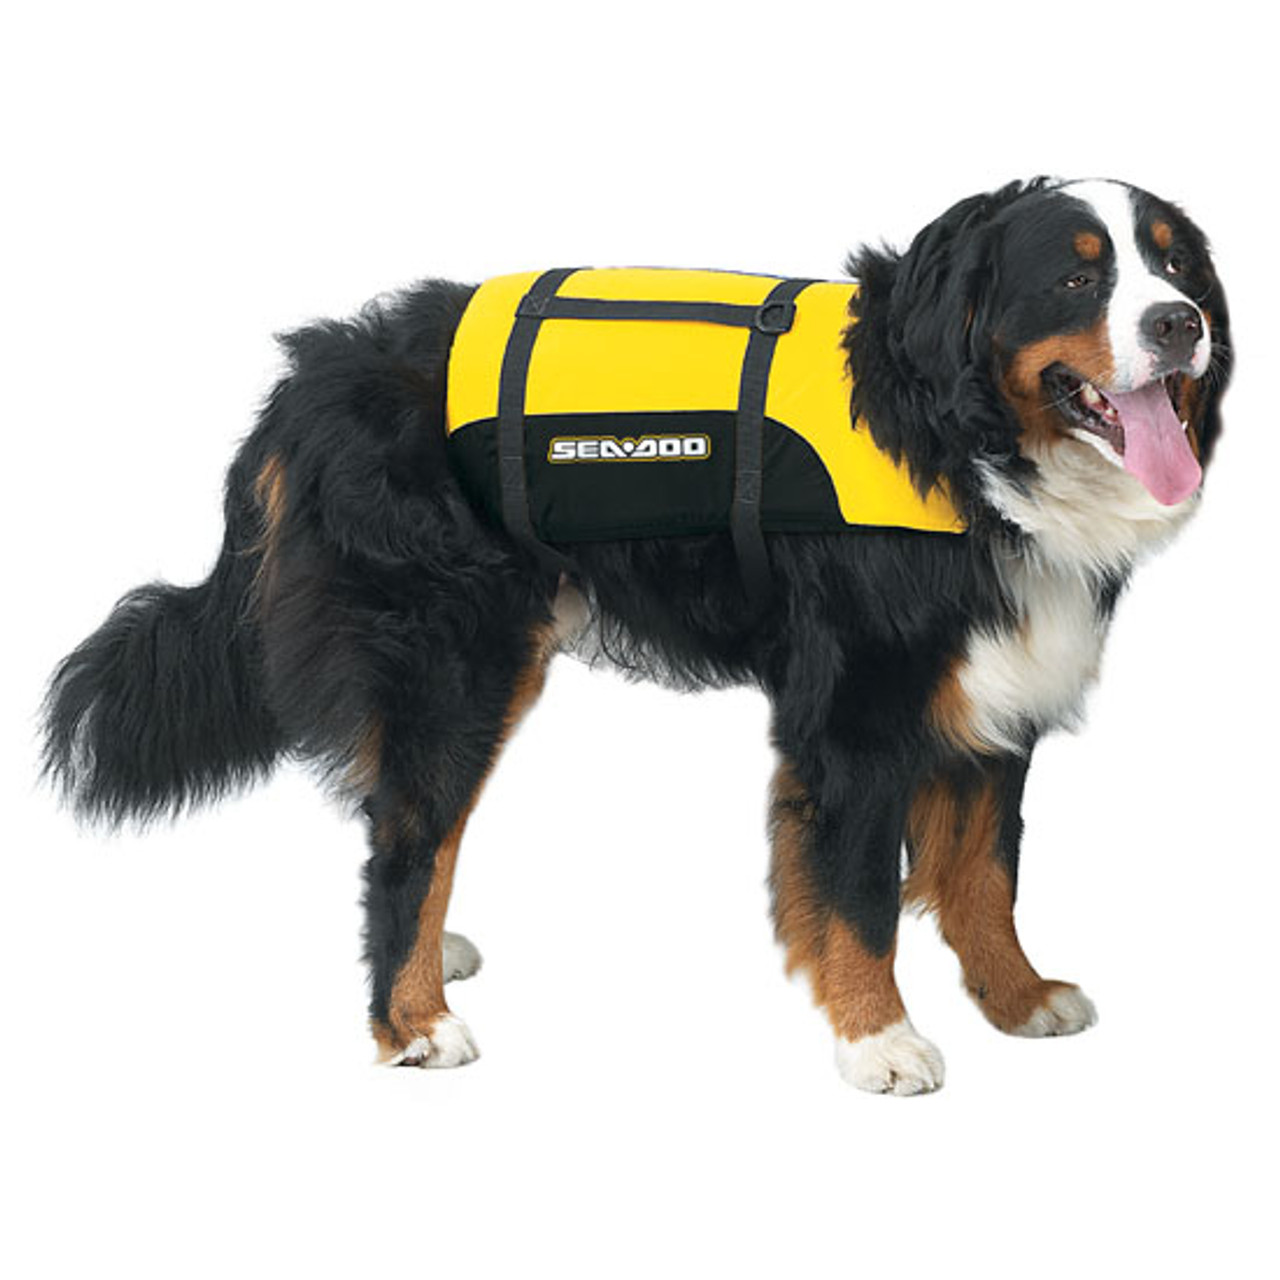 Sea-Doo New Pet PFD Life Jacket Vest for Small/Medium Dogs Yellow 2856997210